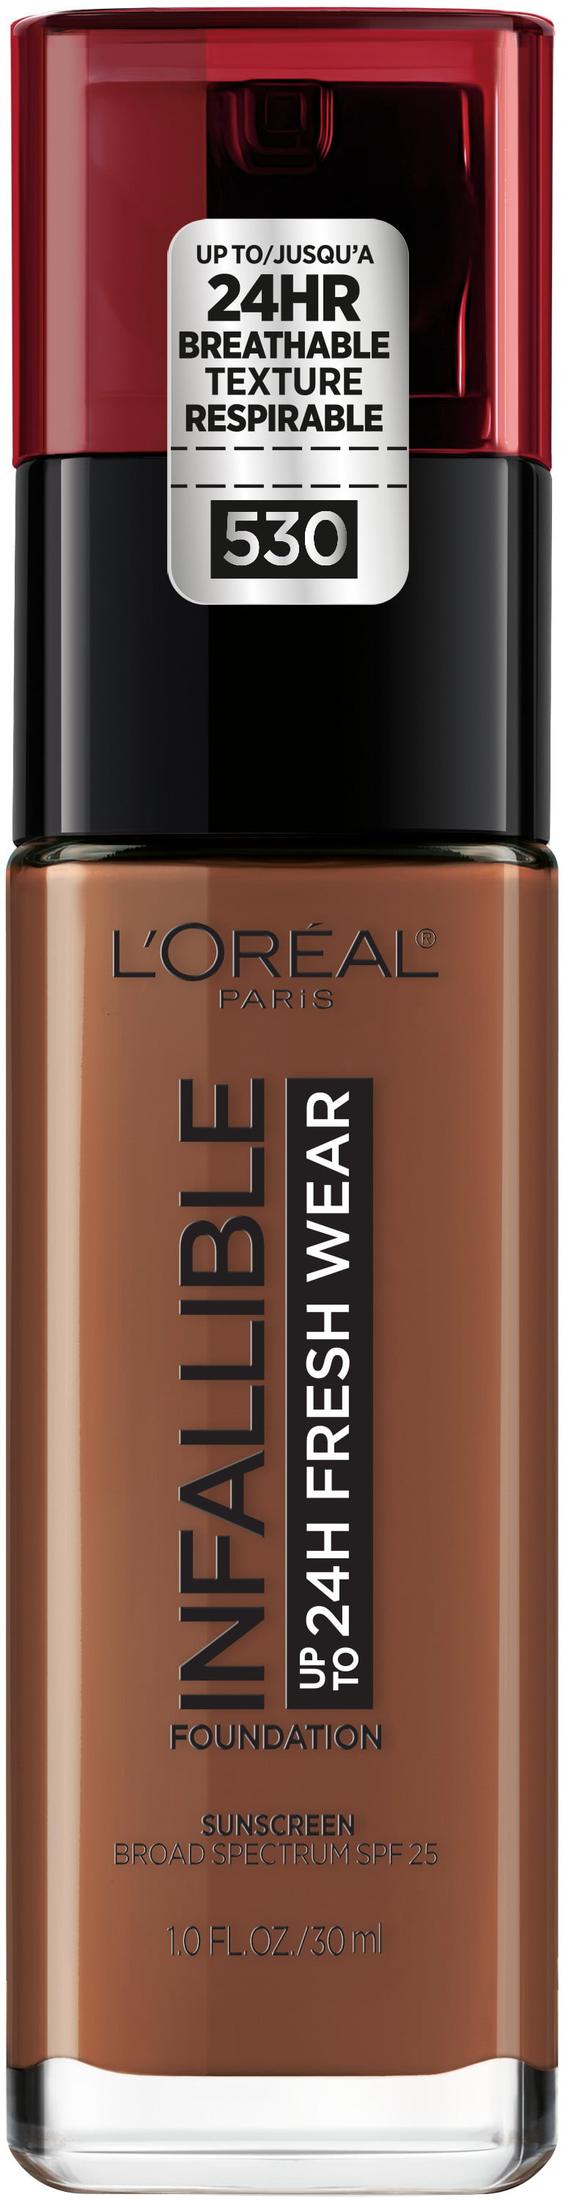 L'Oreal Paris Infallible Fresh Wear 24 Hr Liquid Foundation Makeup, 530 Deep Amber, 1 fl oz - image 1 of 12